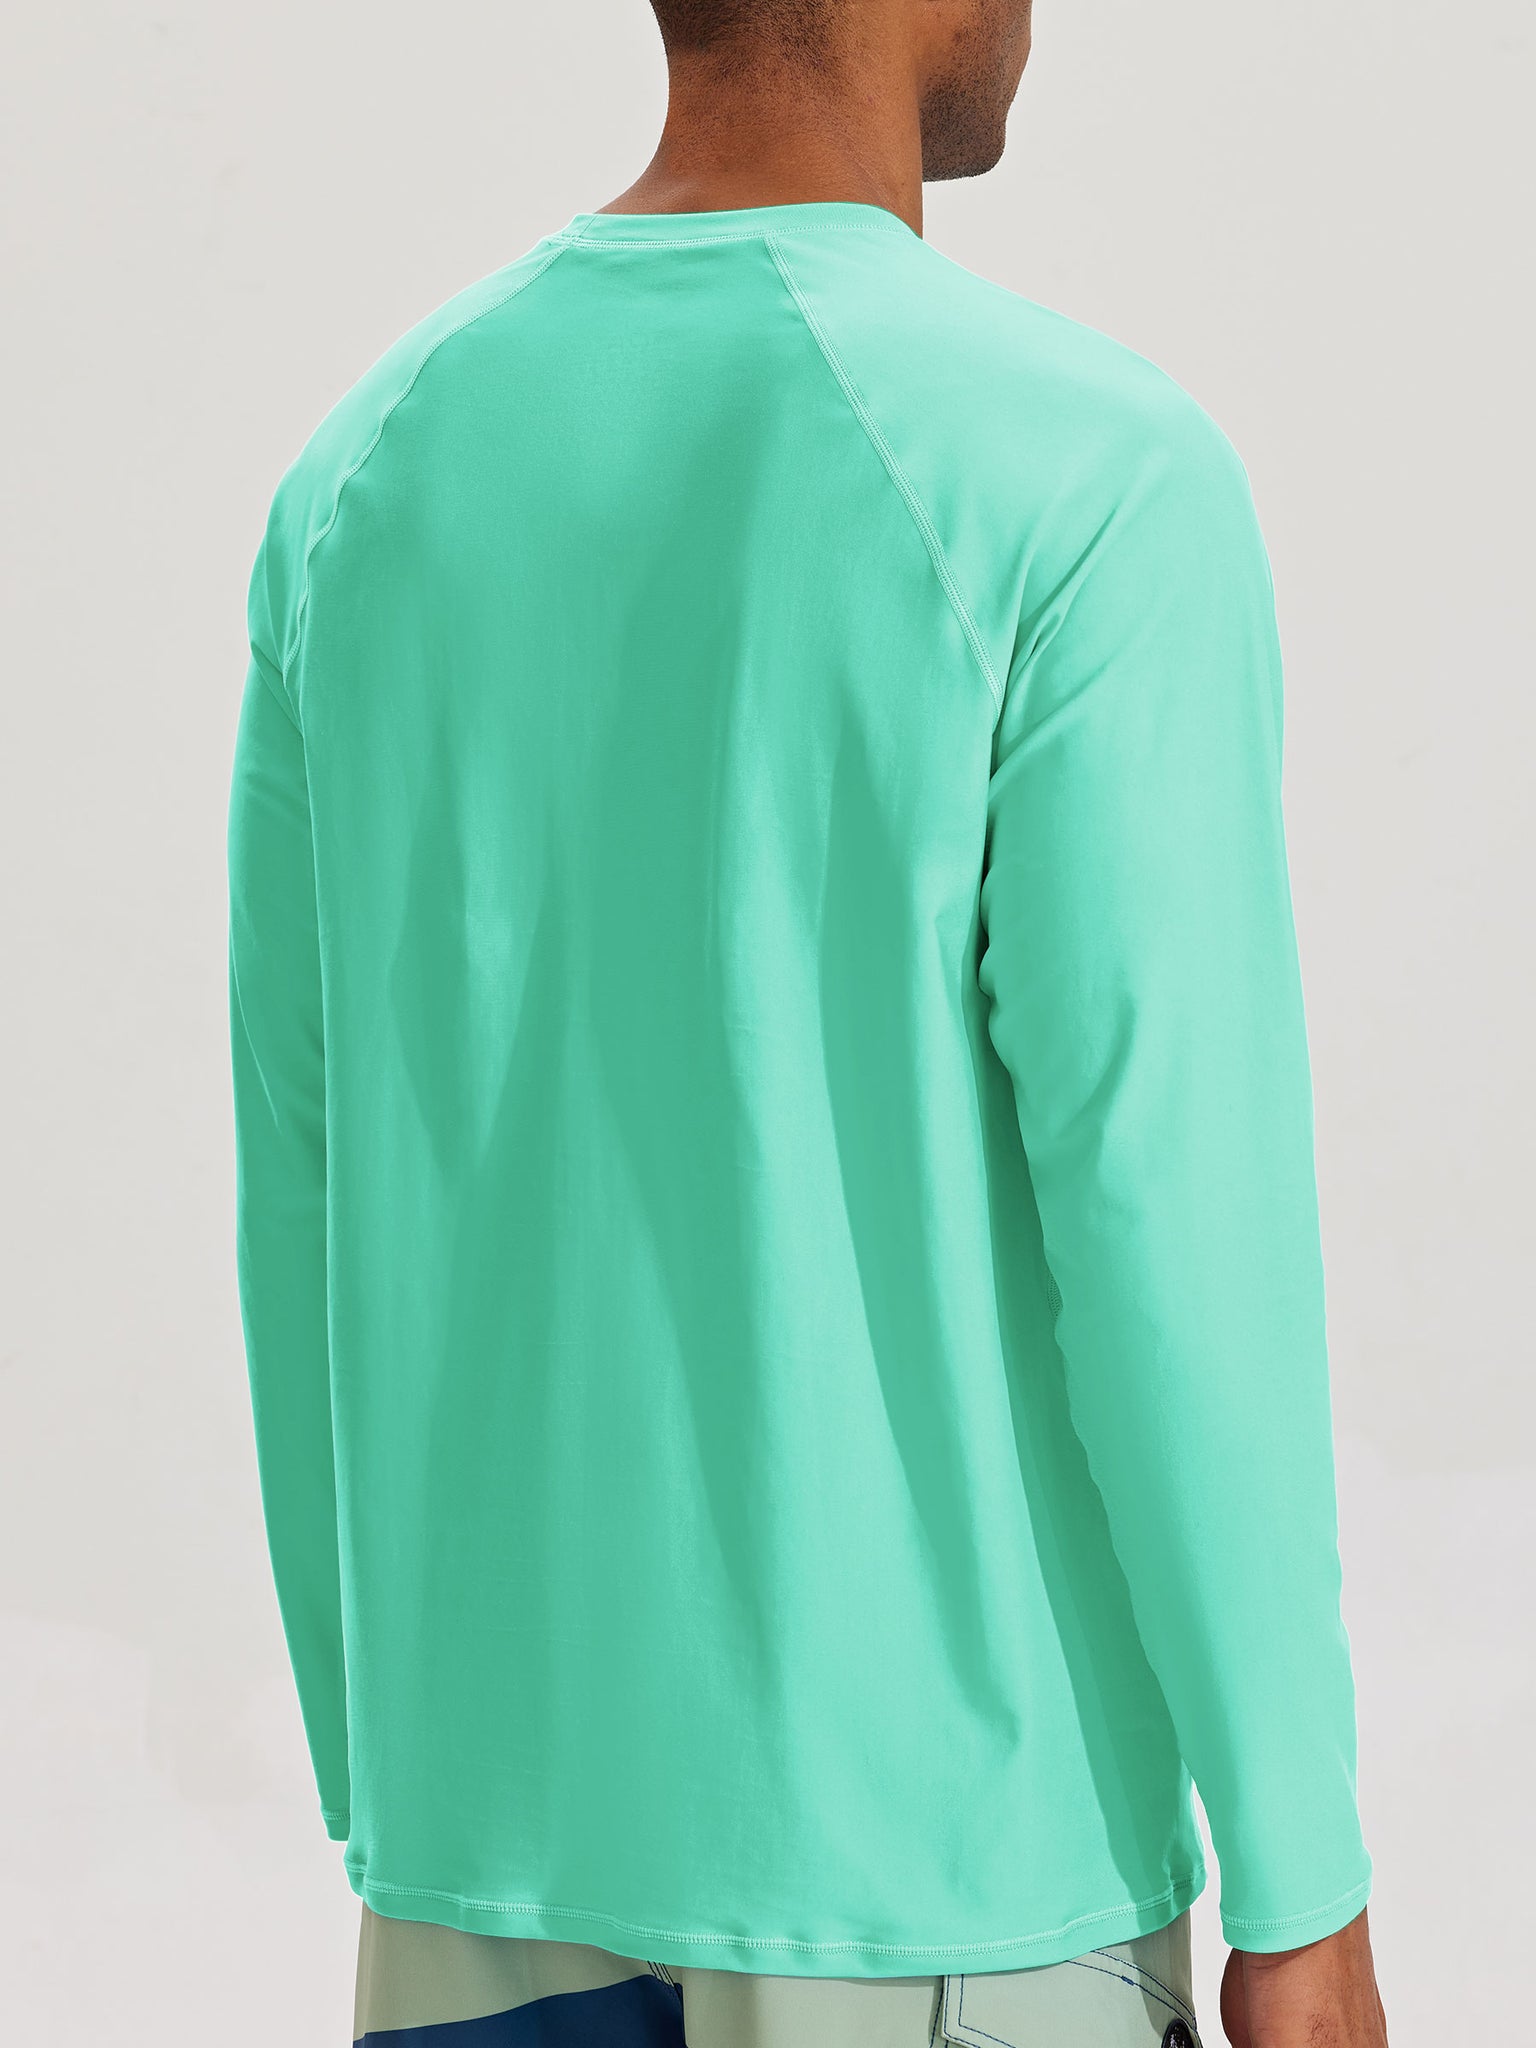 Men's Sun Protection Long Sleeve Shirt_LightGreen_model3